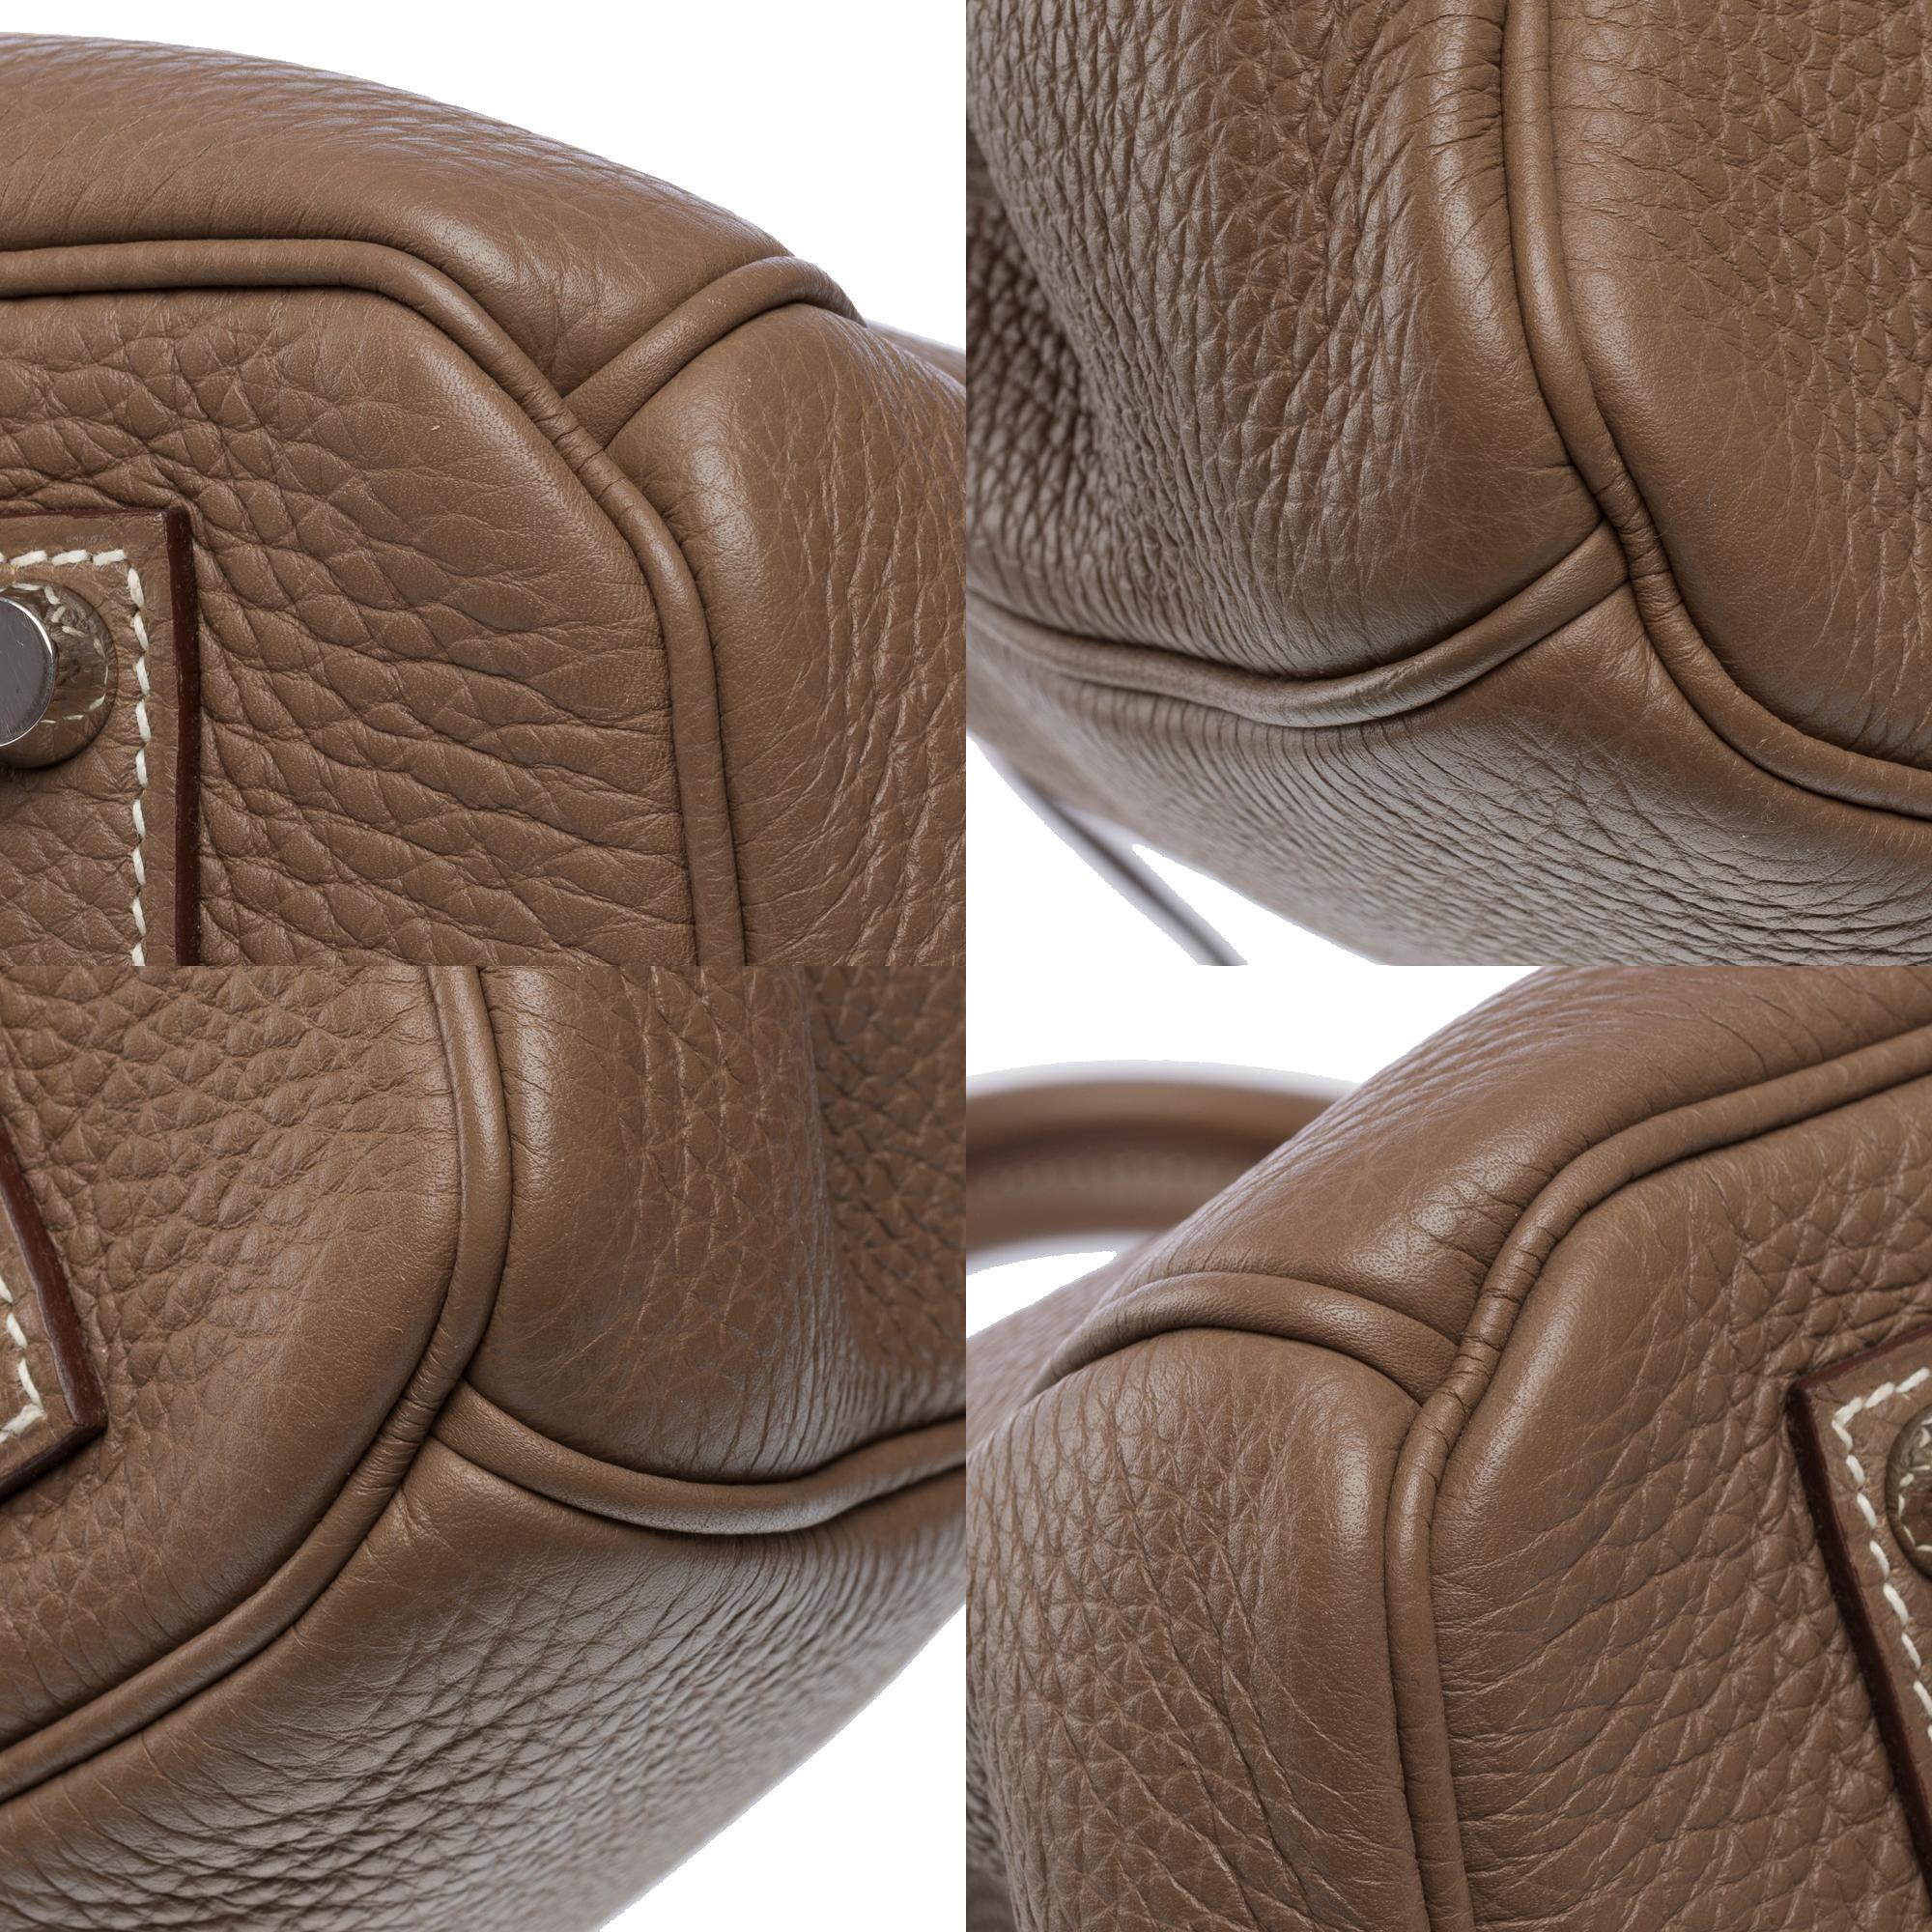 Stunning Hermès Birkin 35 handbag in etoupe Togo leather, SHW 9